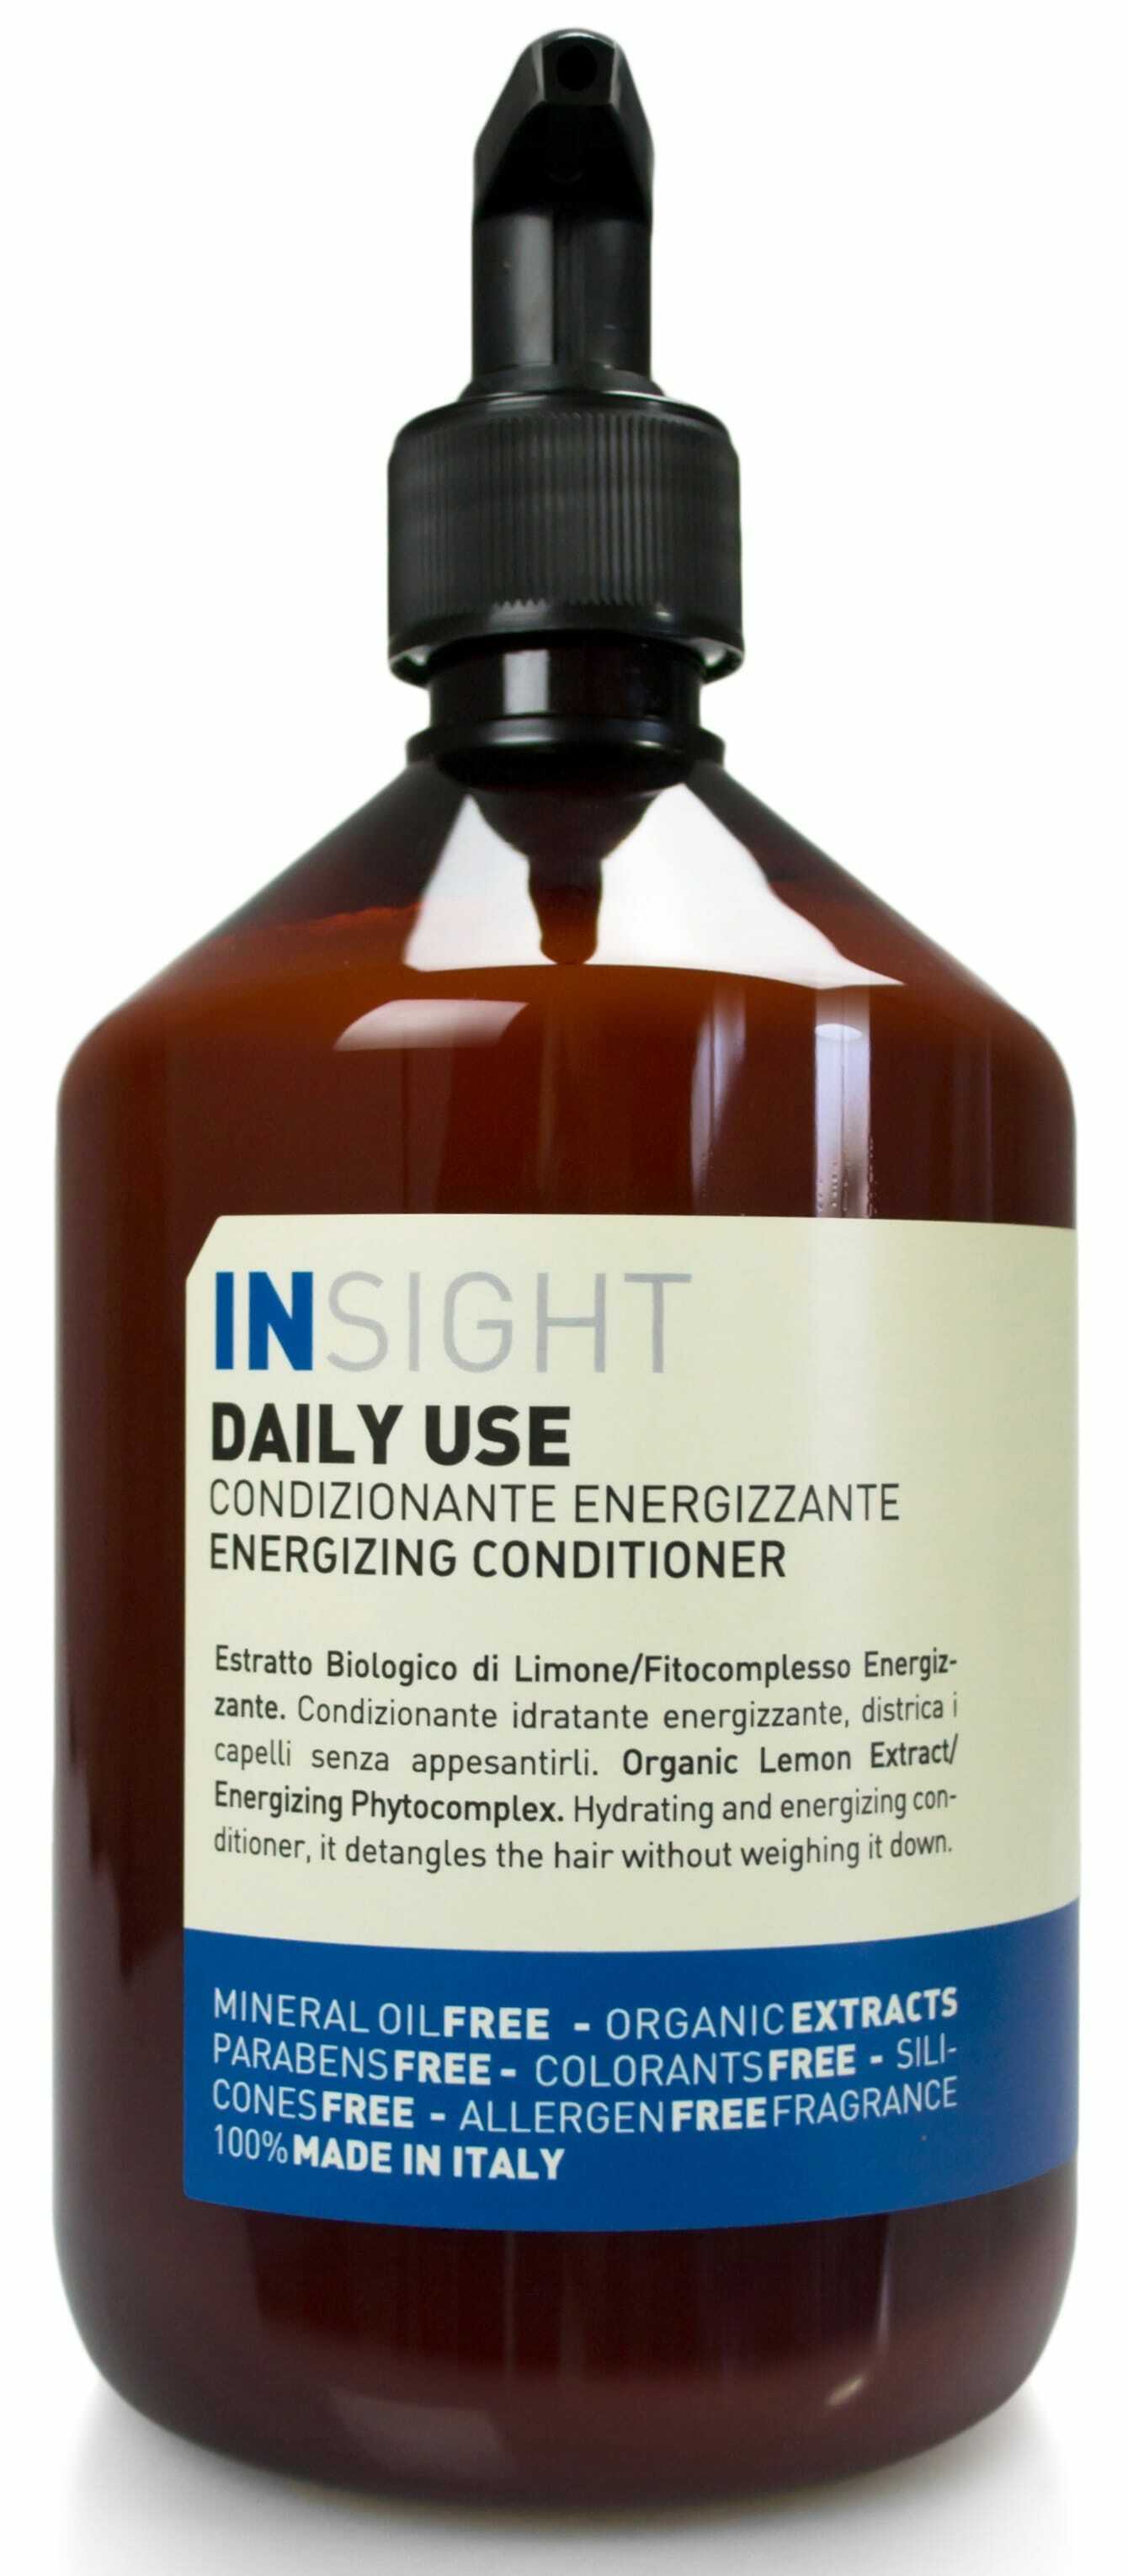 Insight daily use. Шампунь Insight Rebalancing 900 ml. Insight кондиционер для ежедневного использования Daily use (400 мл). Insight antioxidant шампунь. Insight Daily use шампунь.